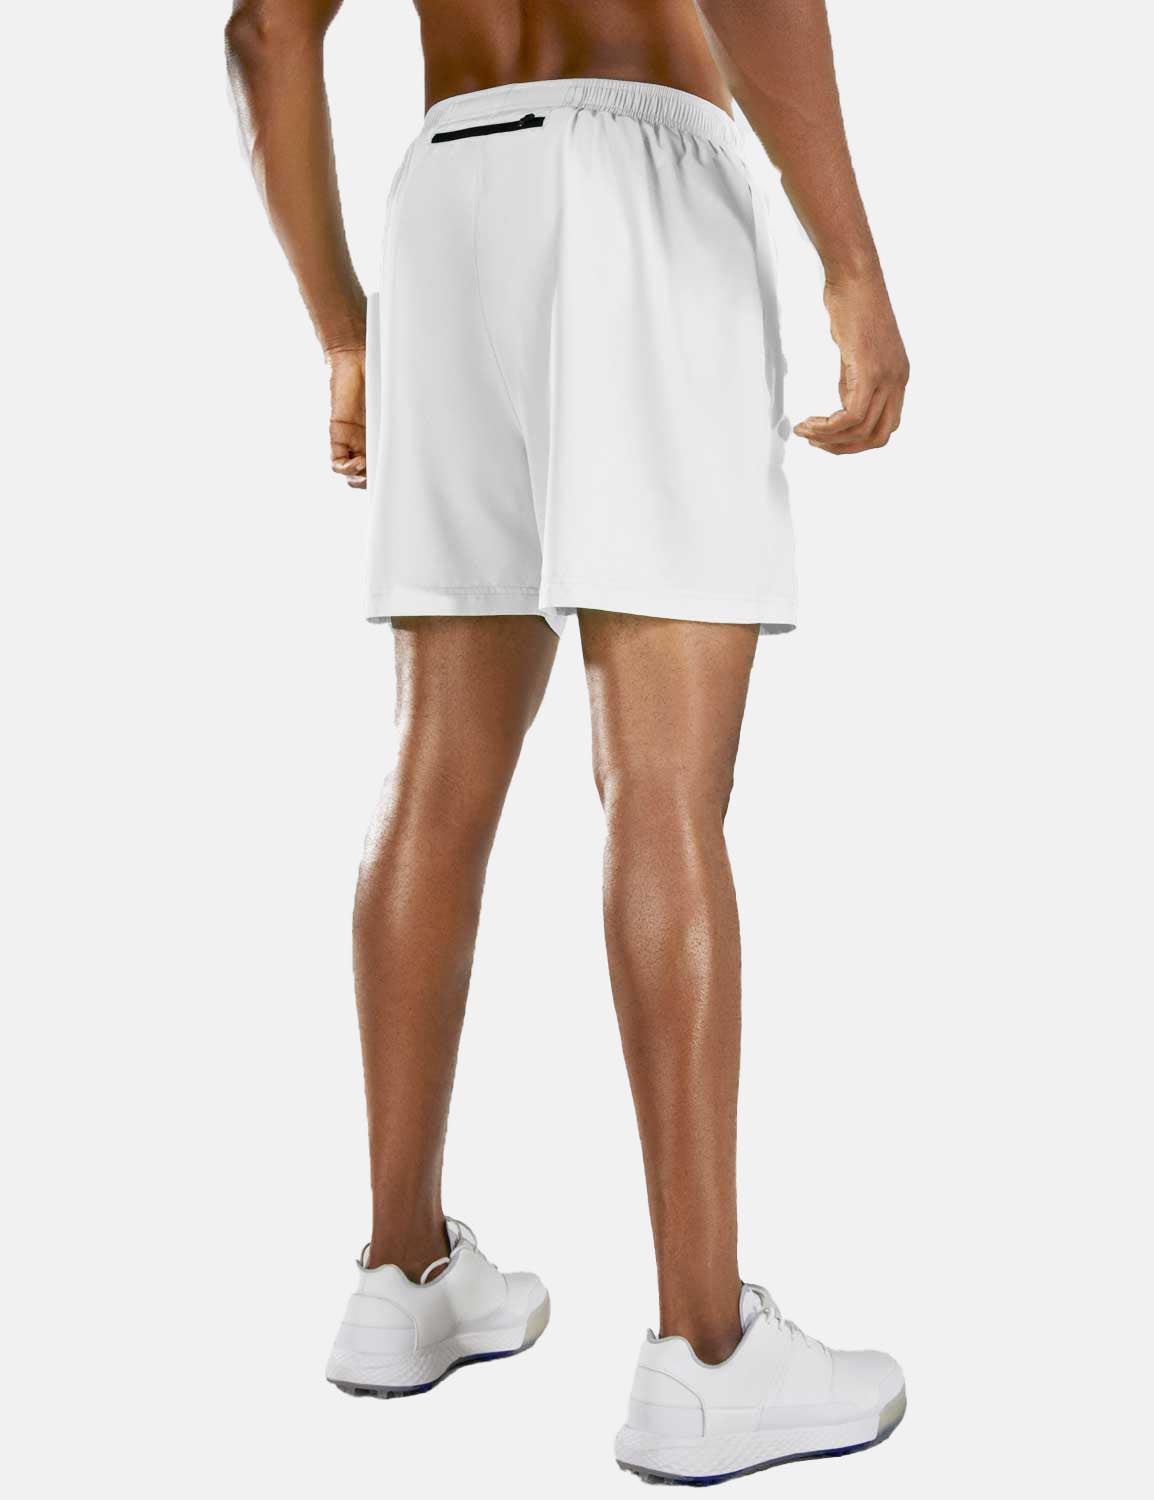 Baleaf Men's 5'' Light-Weight Quick Dry Fully Lined Shorts abd215 White back